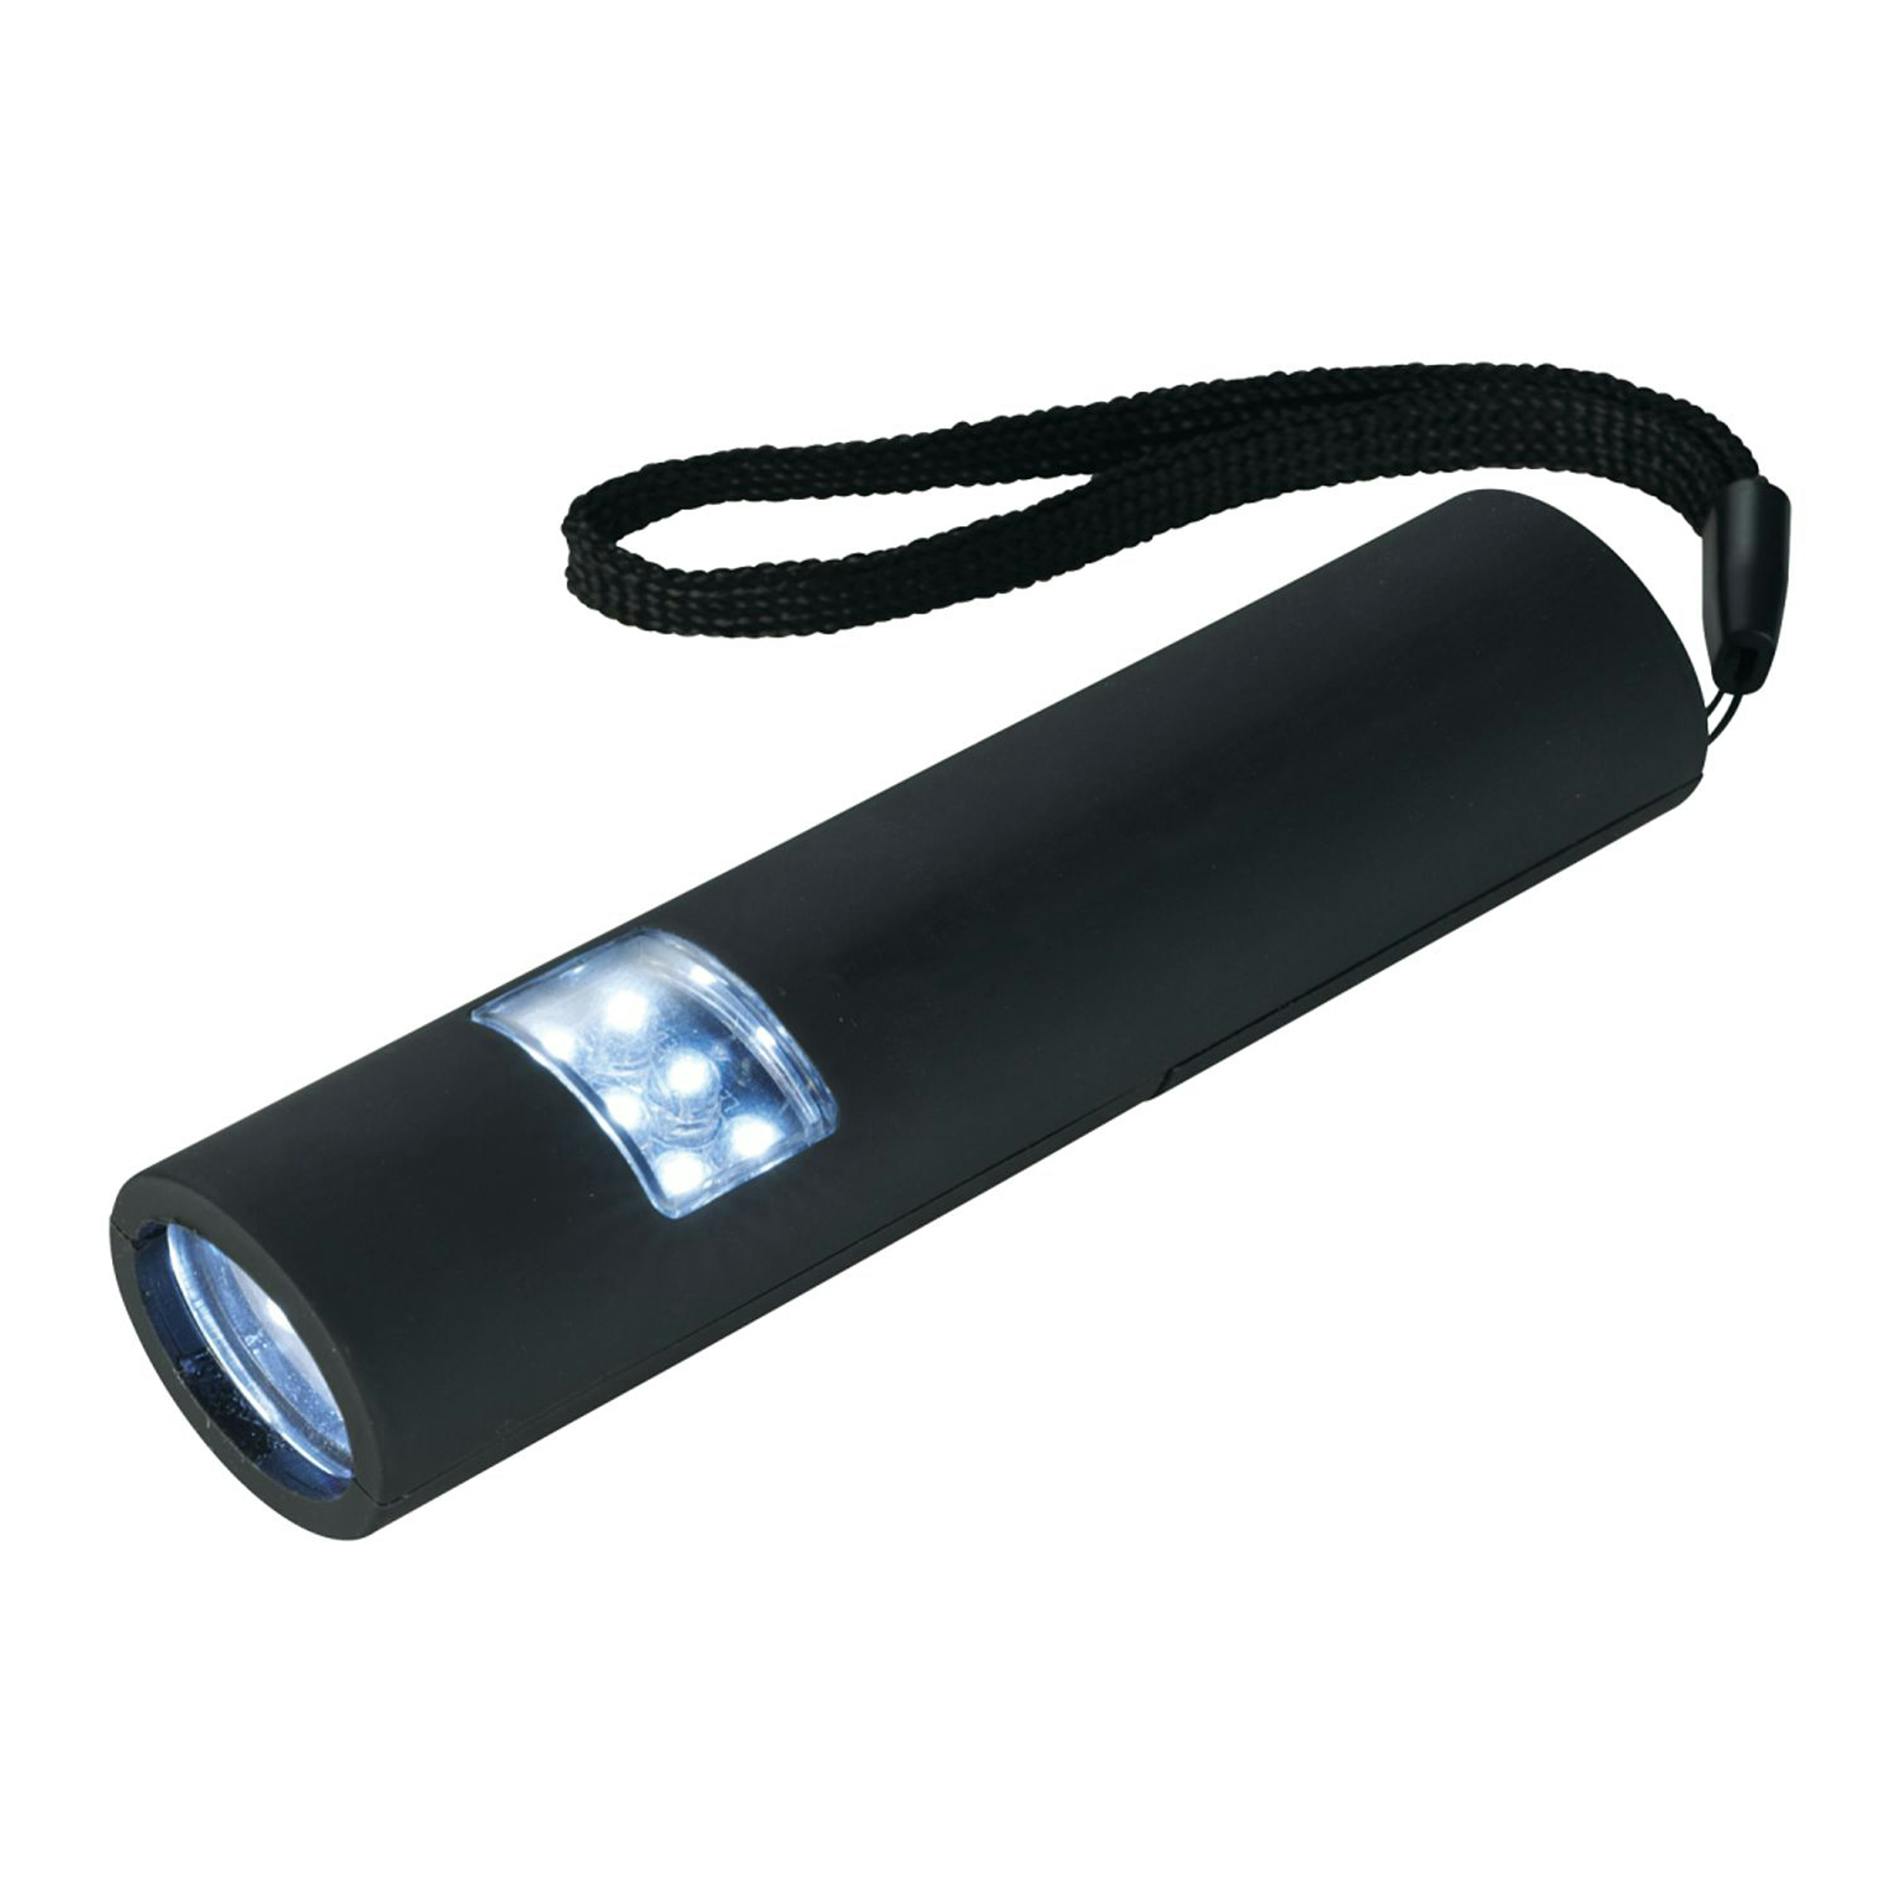 Mini Grip Slim and Bright Magnetic LED Flashlight - additional Image 1